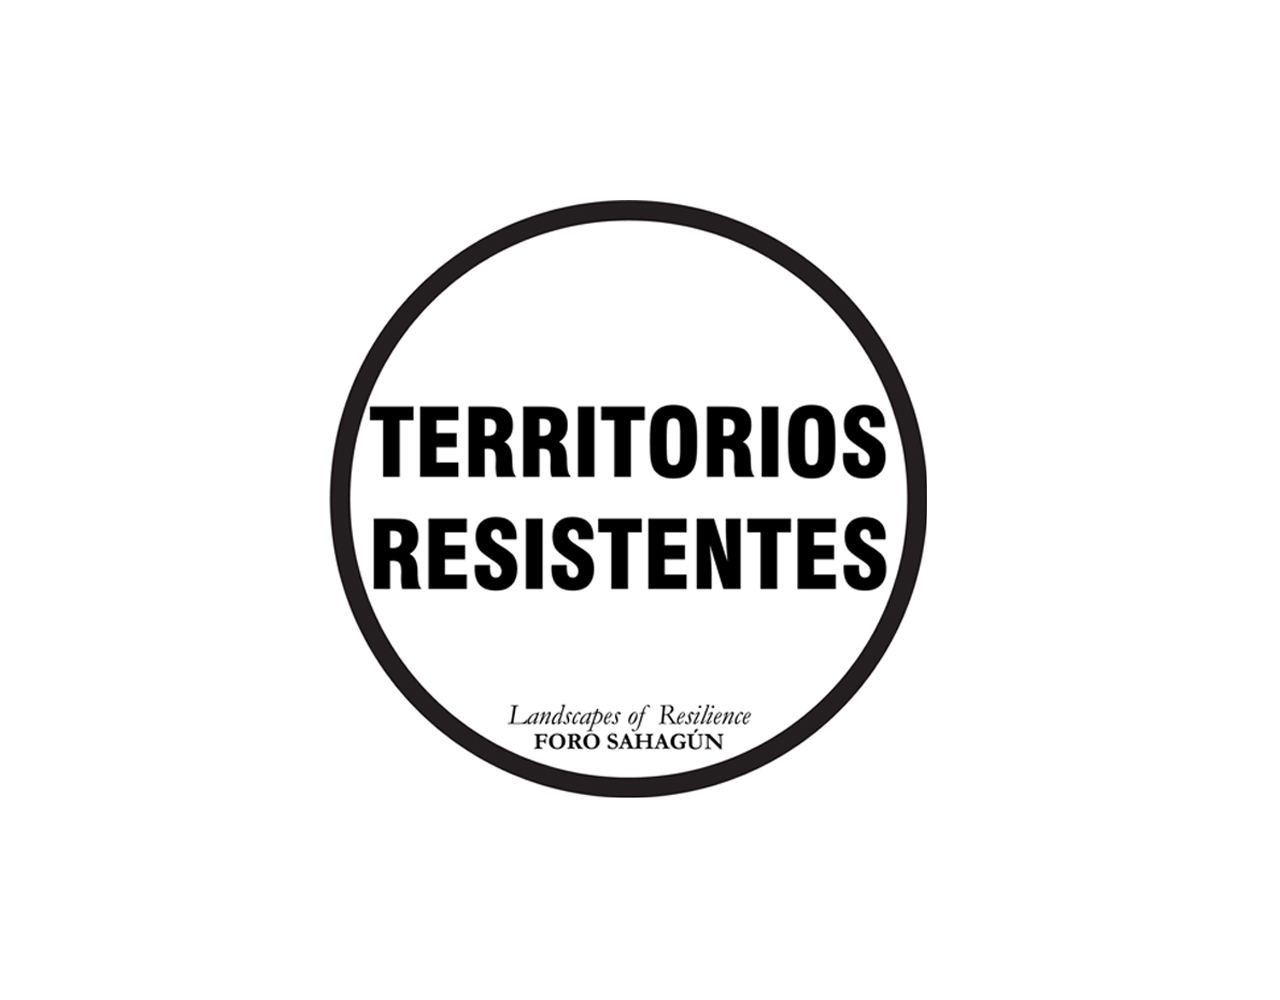 Foro «Territorios Resistentes» en Sahagún | XV Bienal Española de Arquitectura y Urbanismo